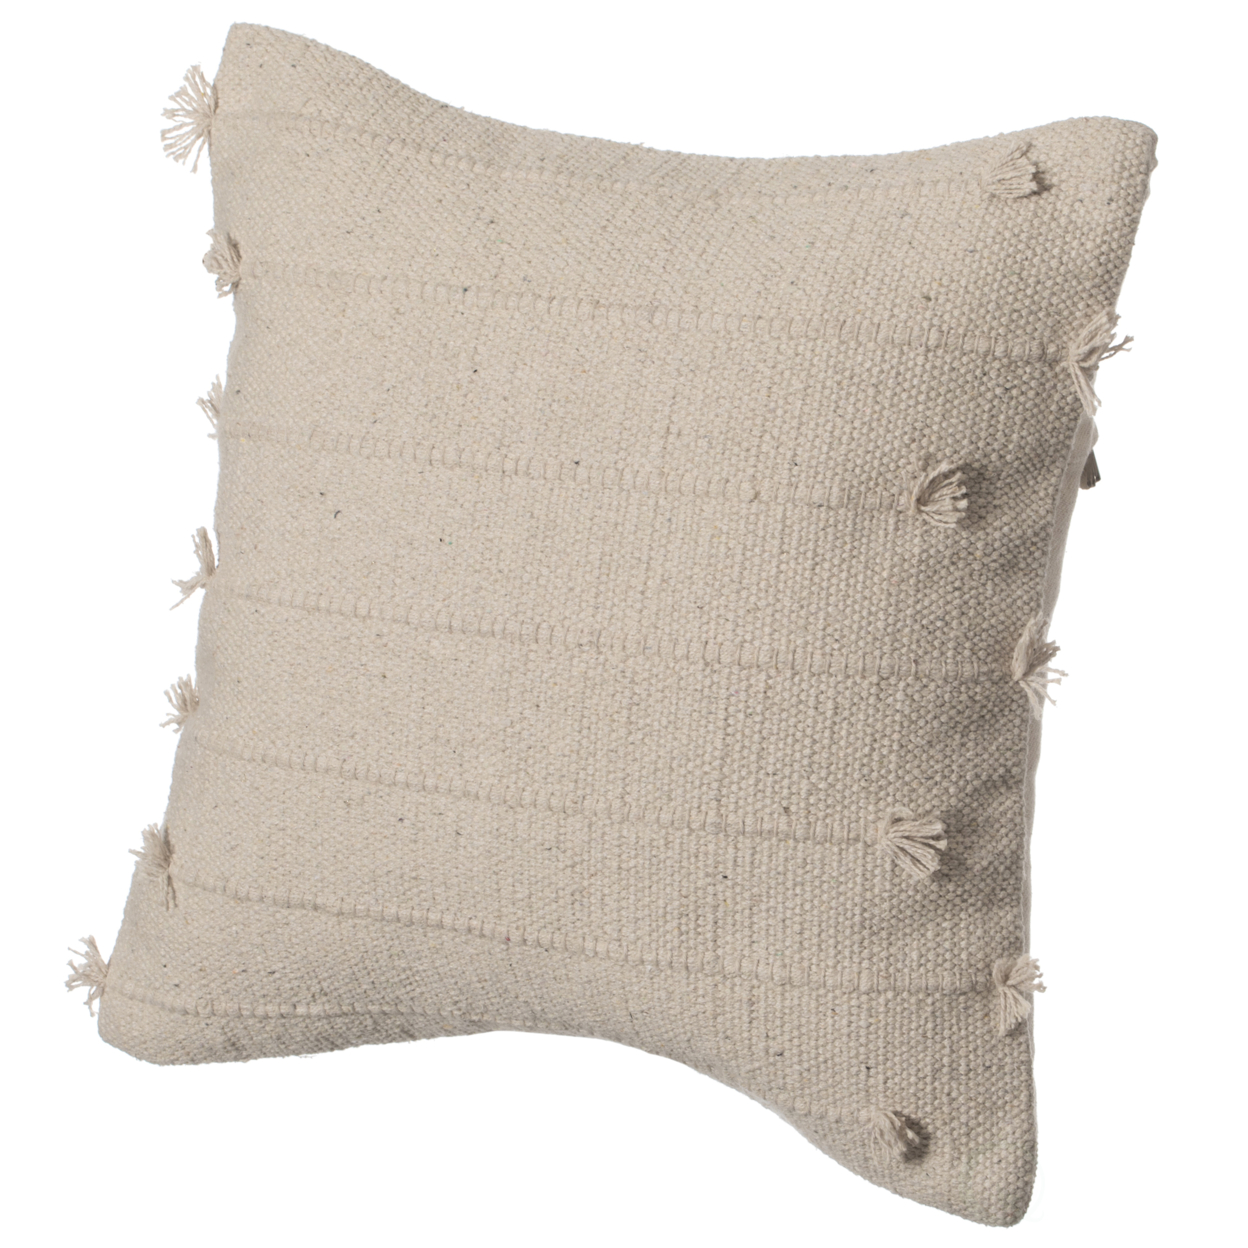 16 Handwoven Cotton Throw Pillow Cover Flat Natural Design - Drawstring